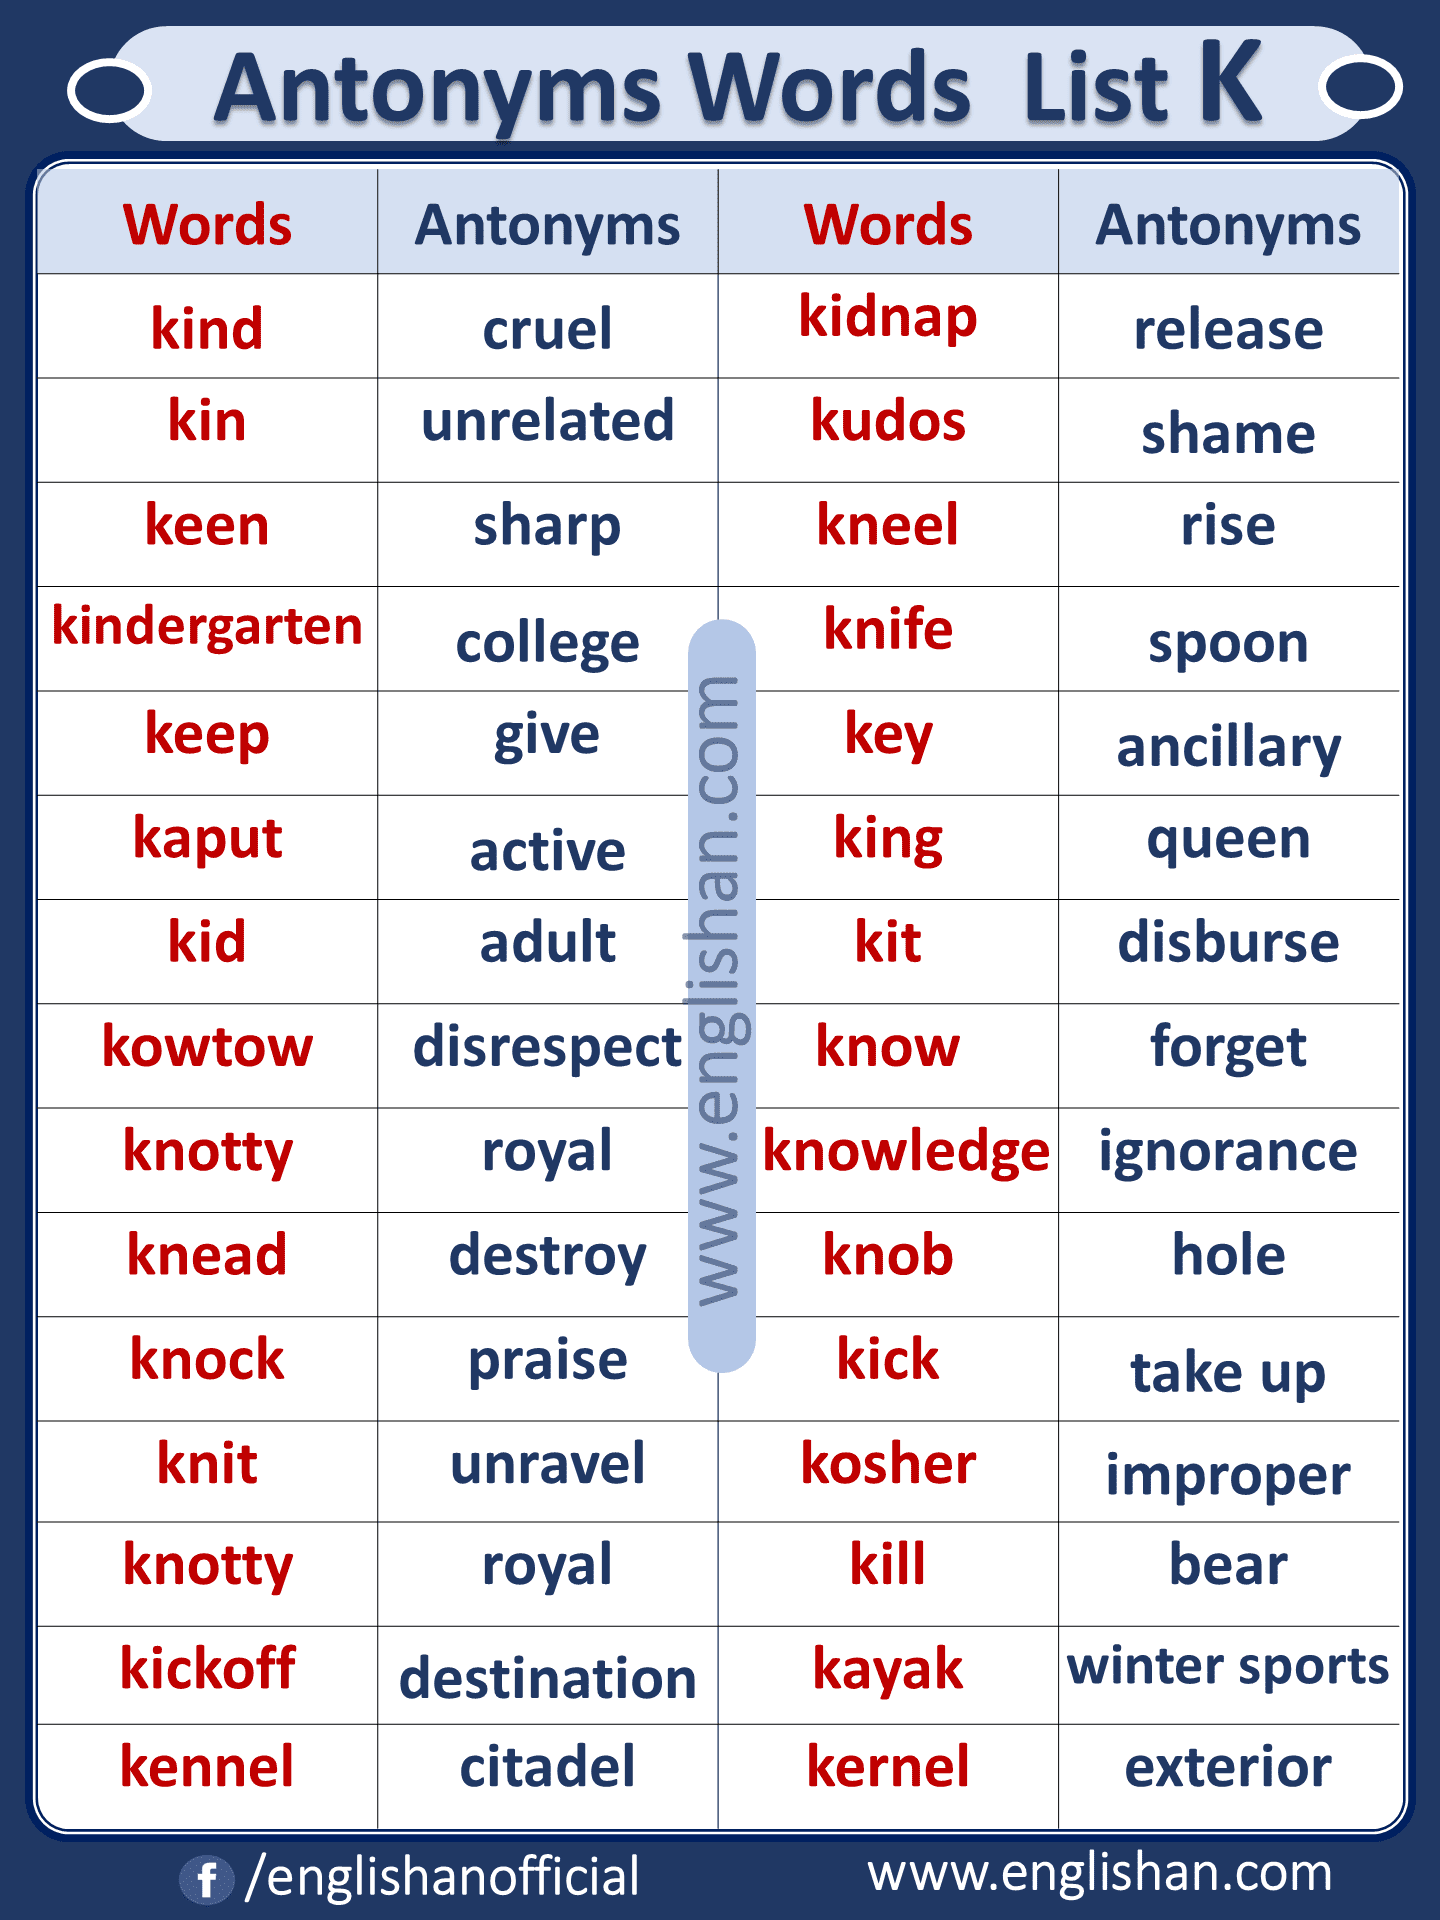 Antonyms Words List K